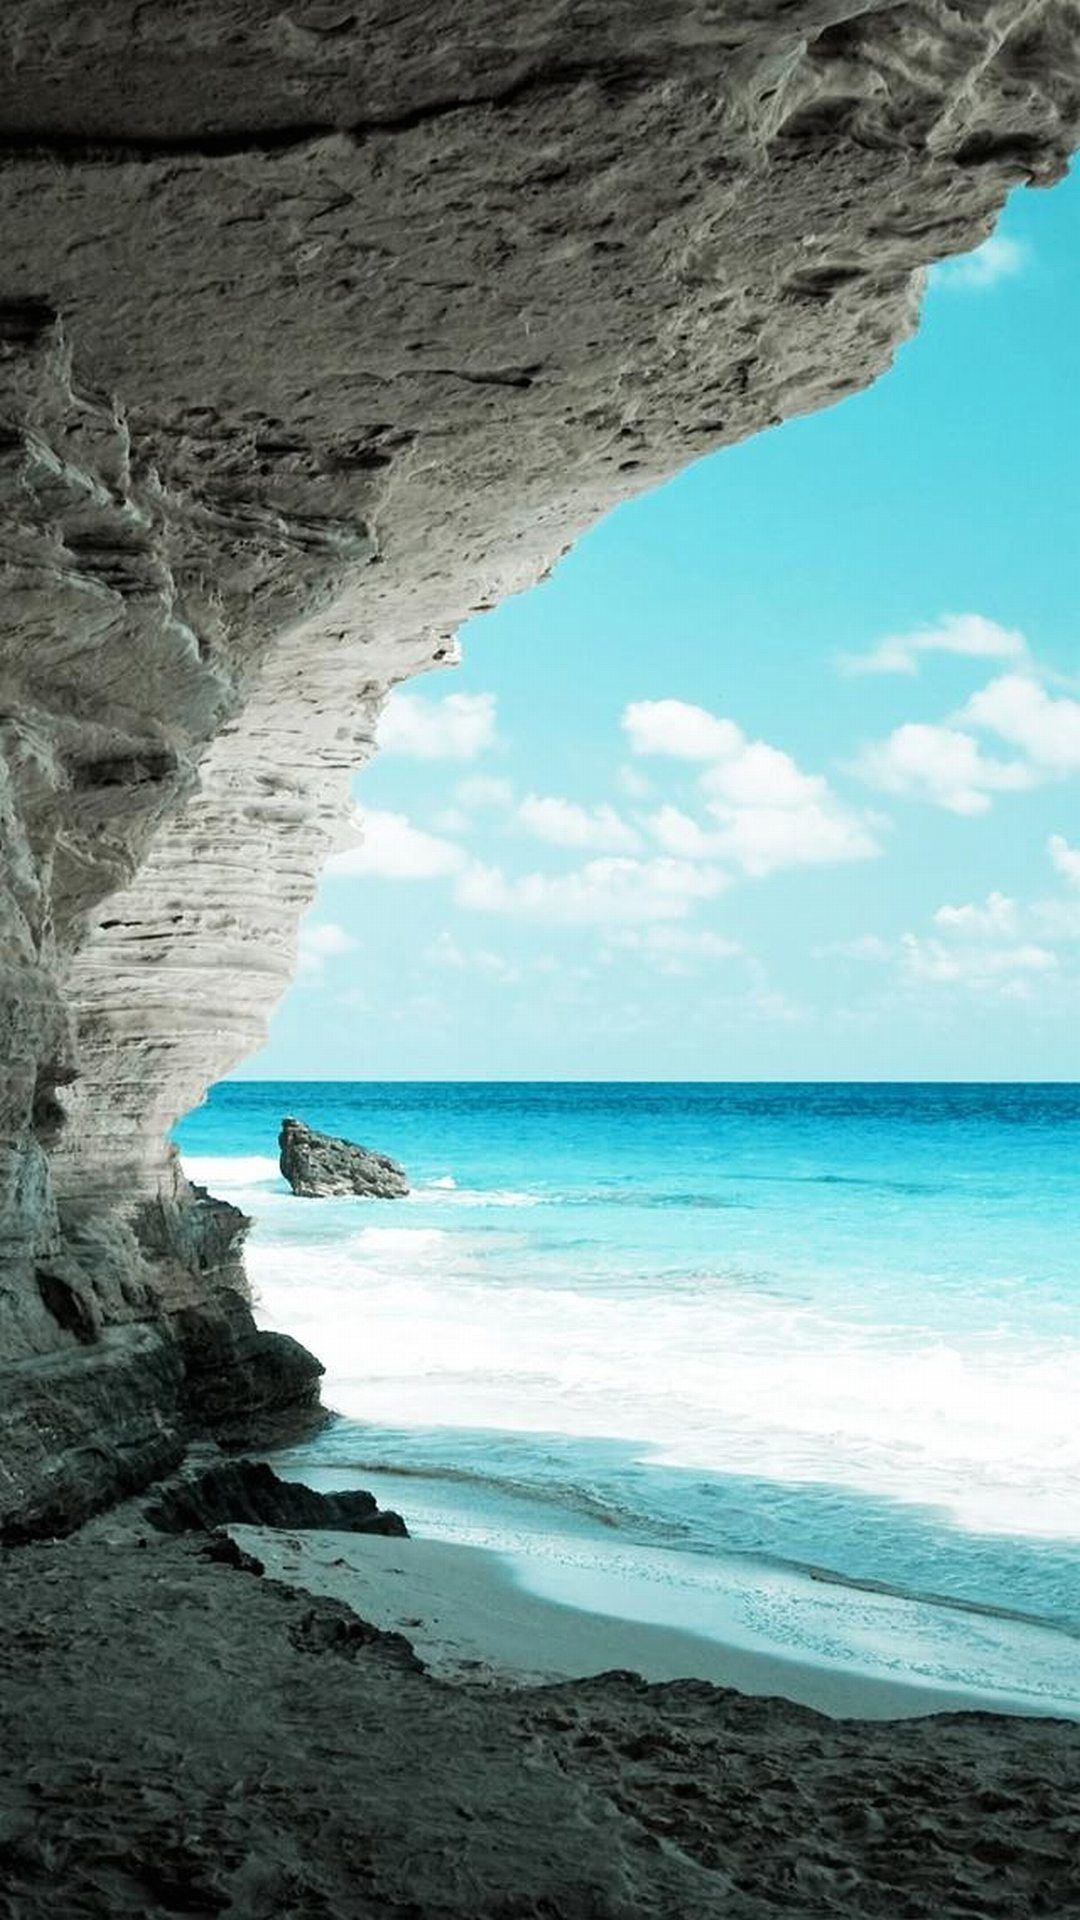 Wallpaper Xiaomi Mi3 Mi4 Awesome Hi Quality. Beautiful beaches, Places to travel, Beach wallpaper